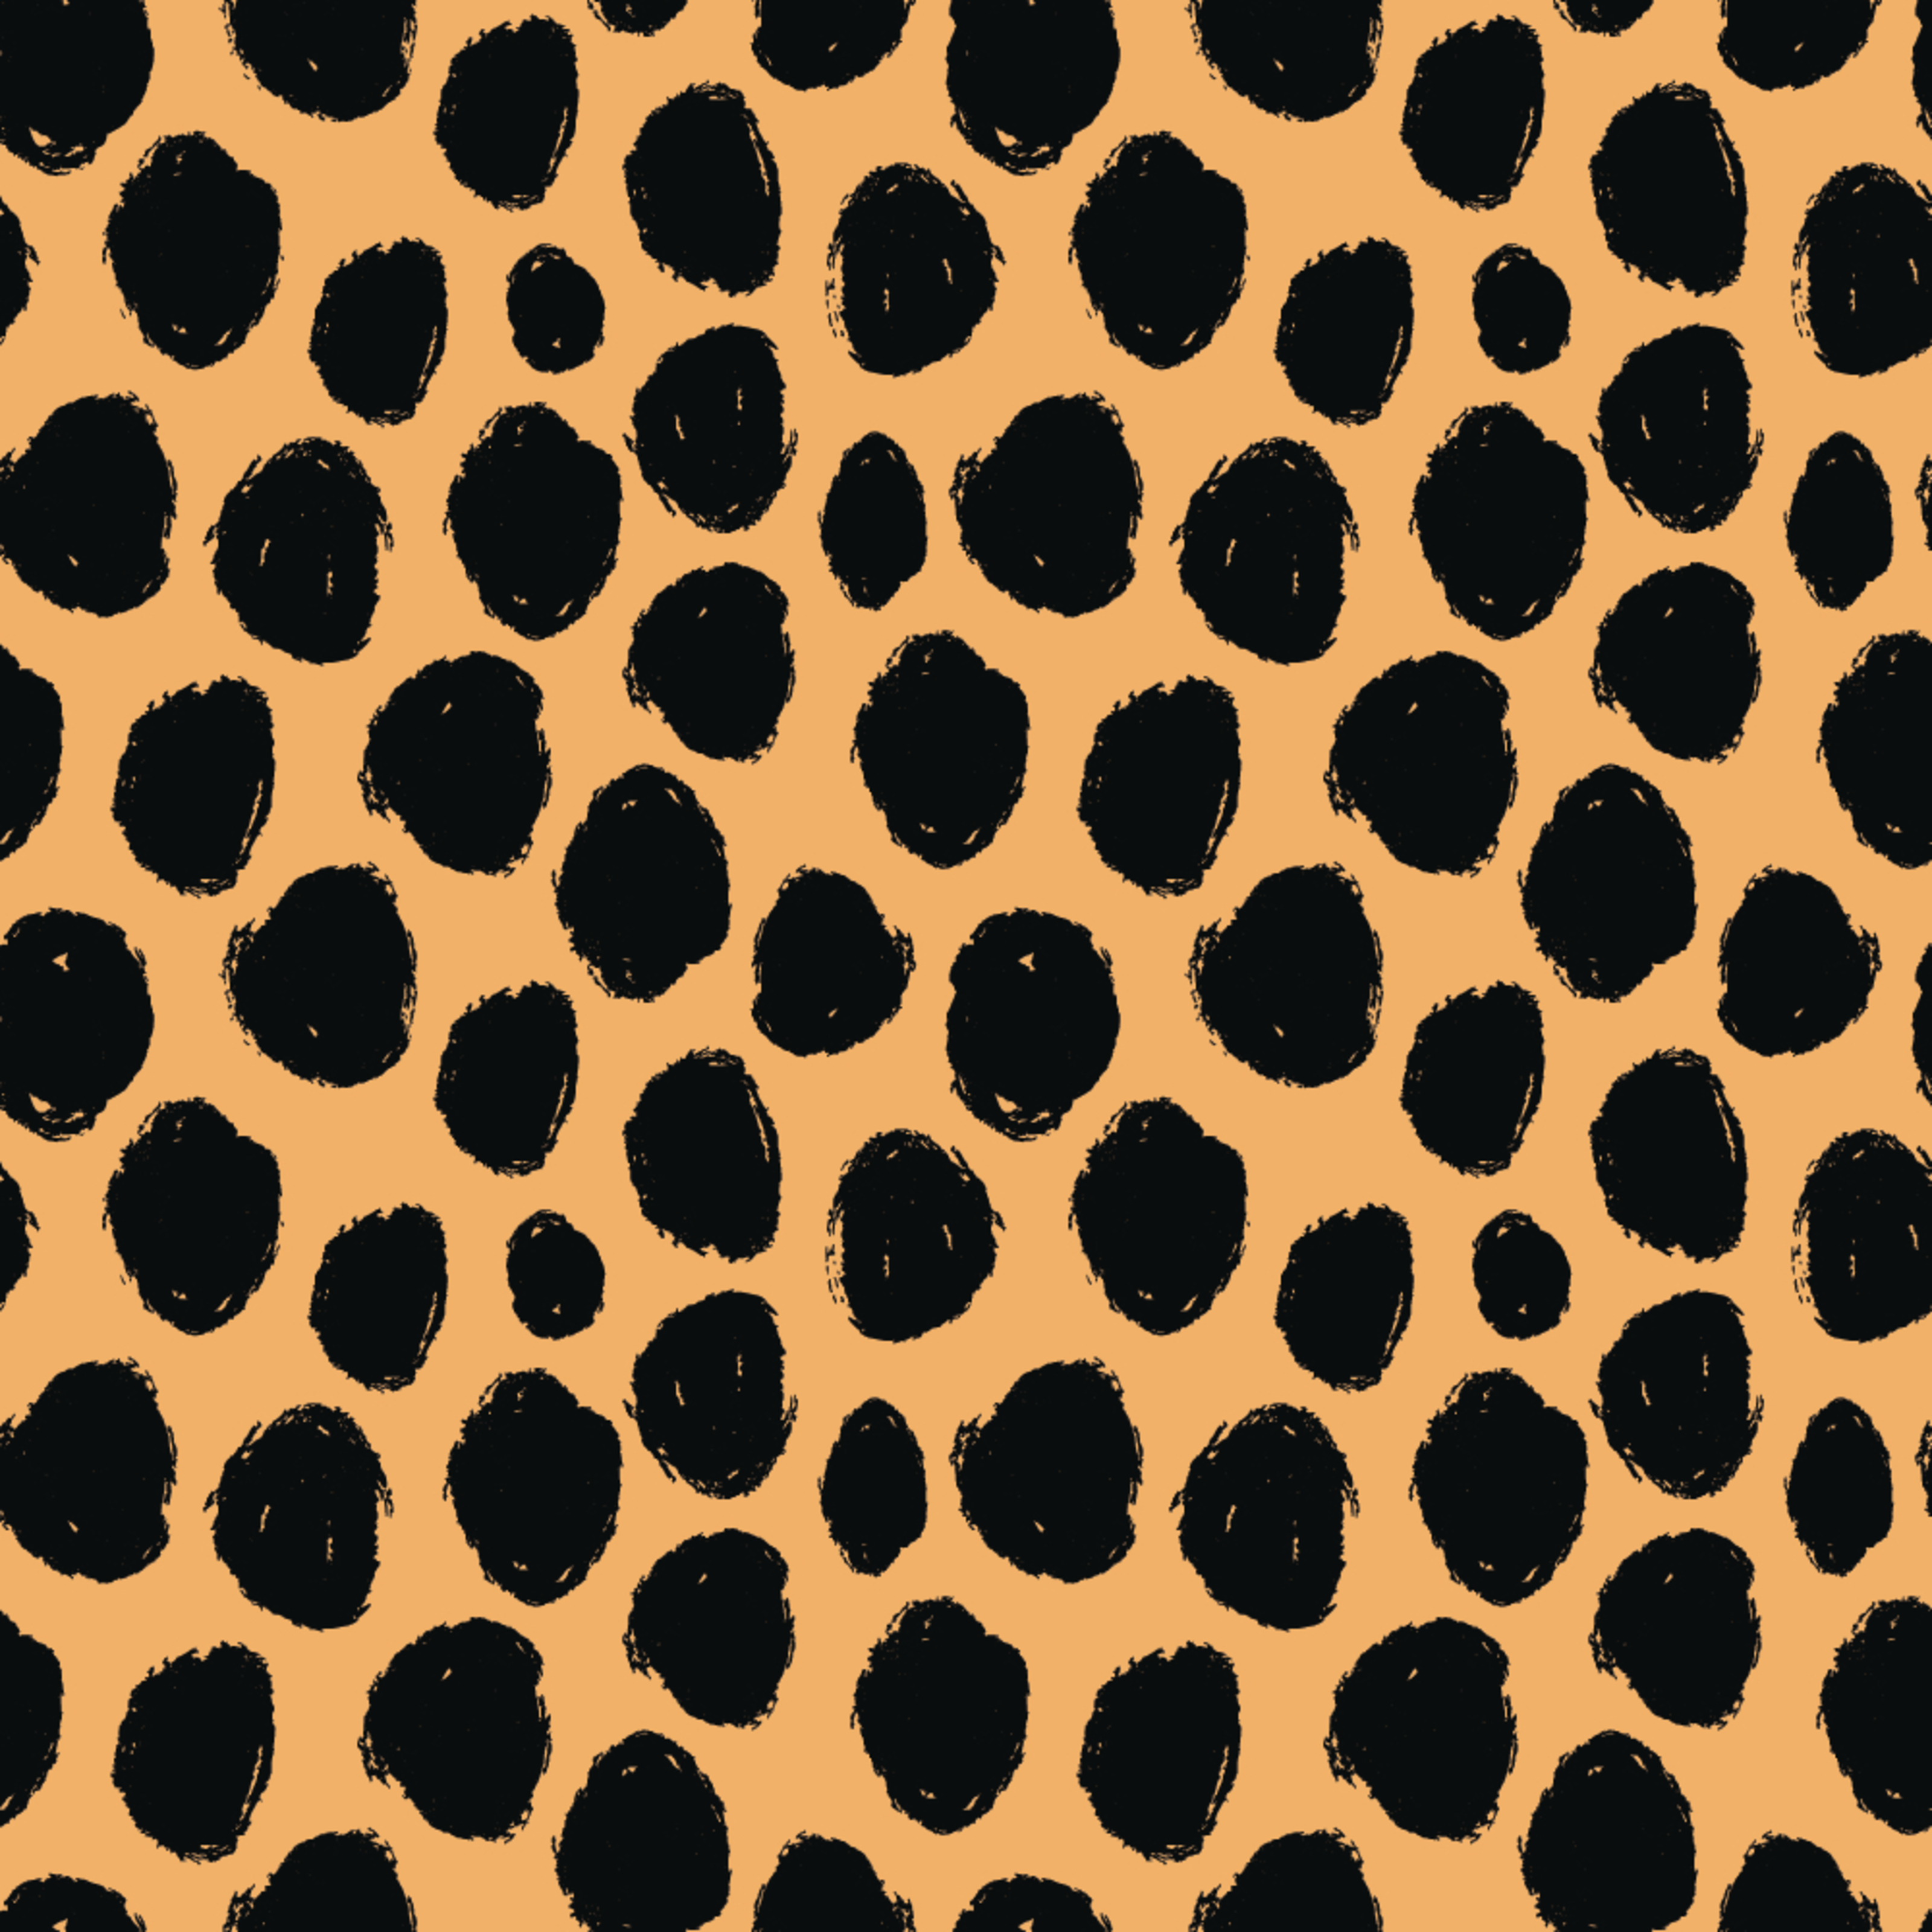 colored cheetah print